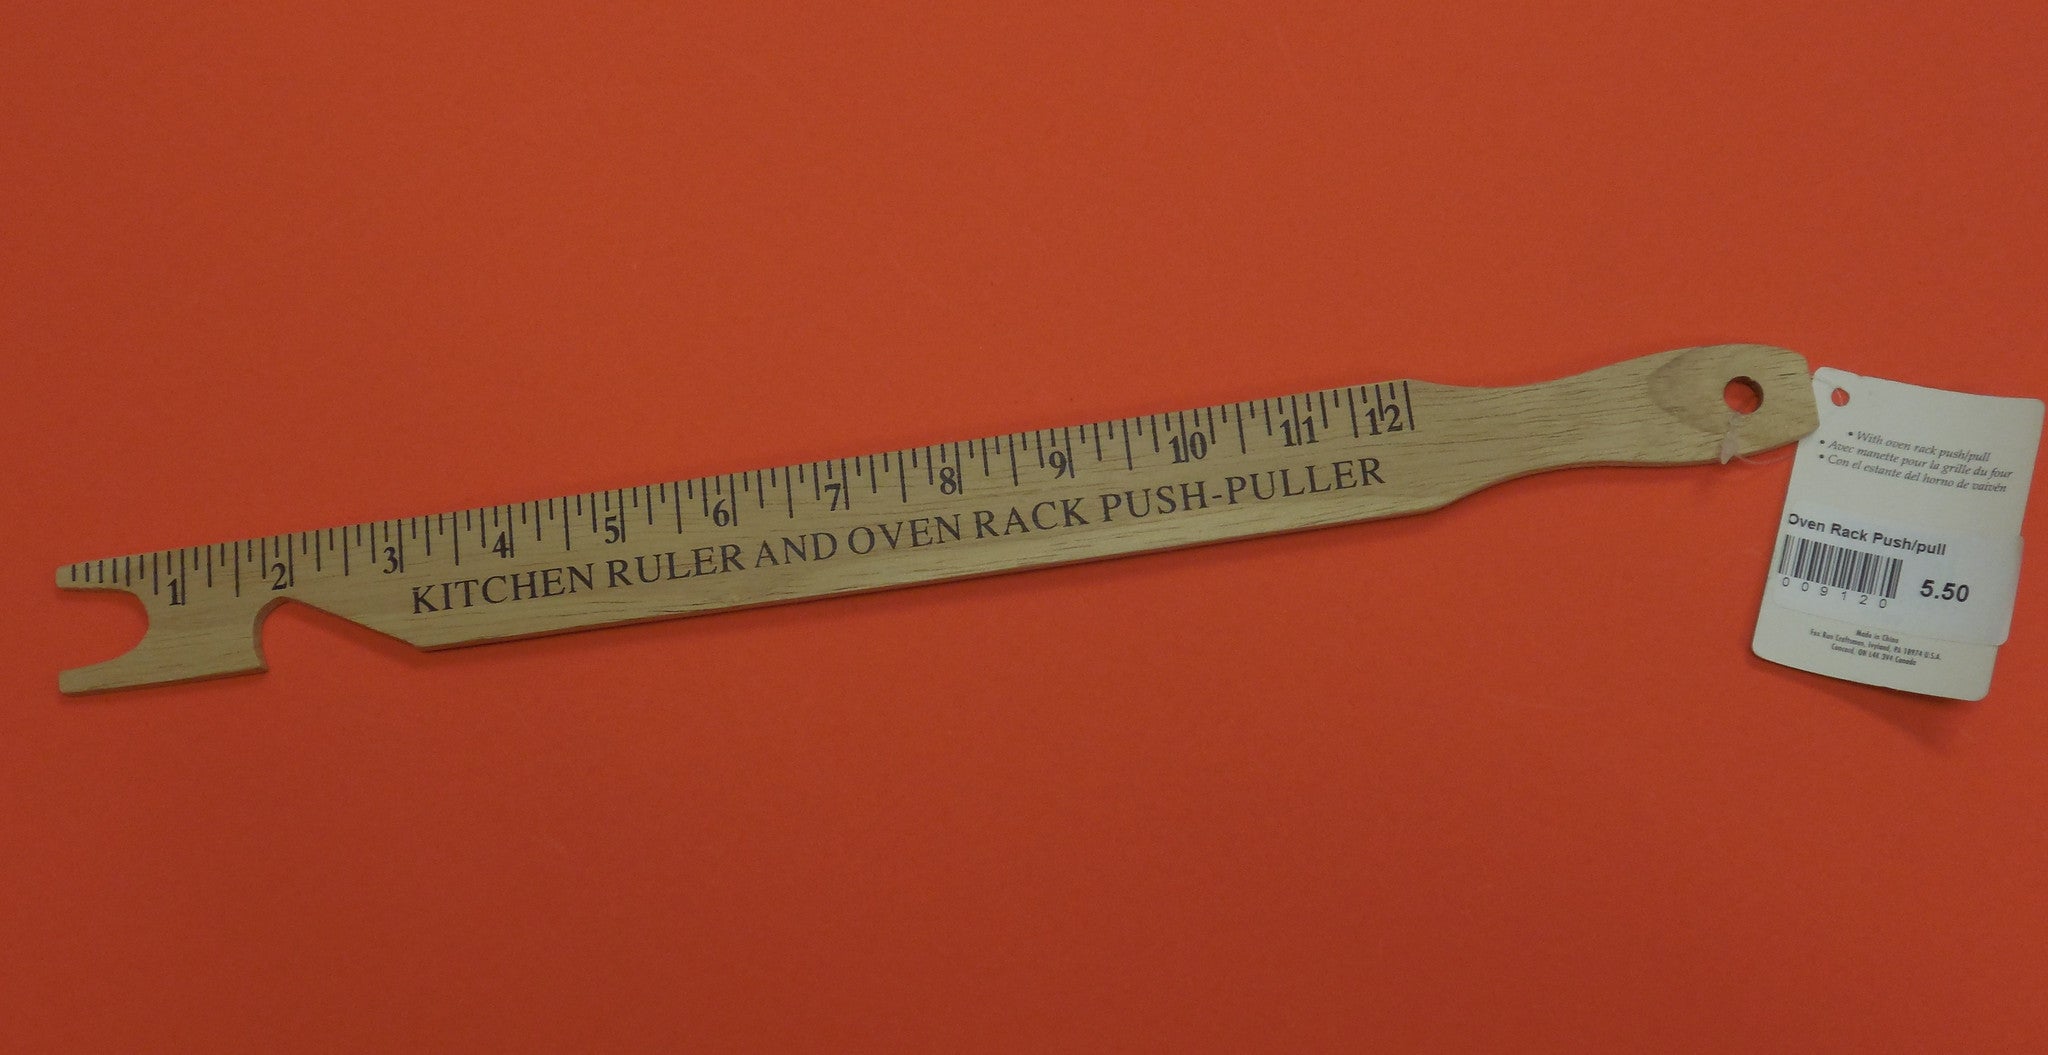 Push-Pull Kitchen Ruler